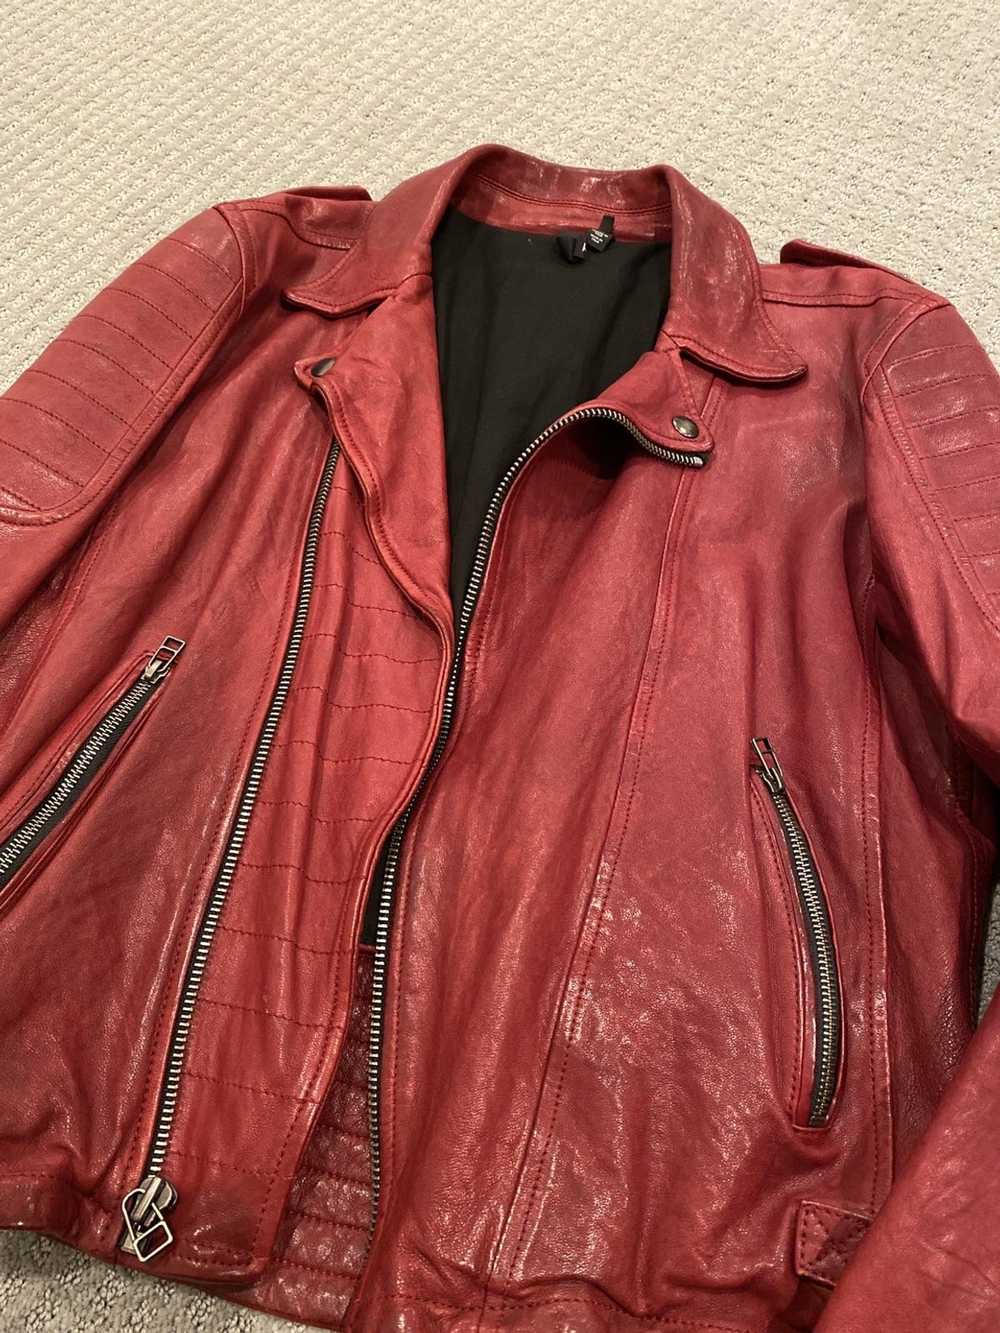 Edun Edun Red Leather Moto Jacket - image 4